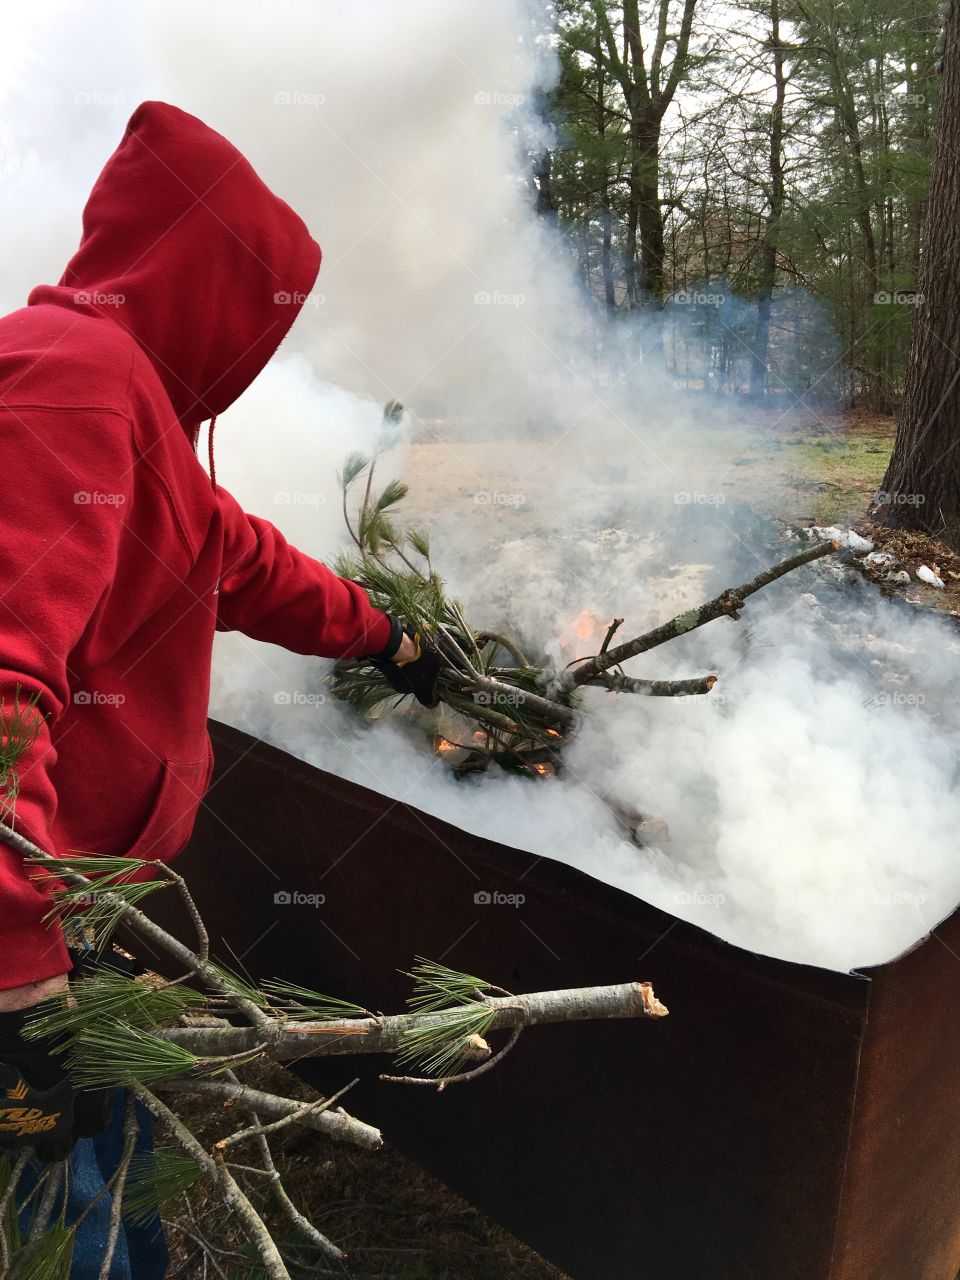 Burning wood with smoke